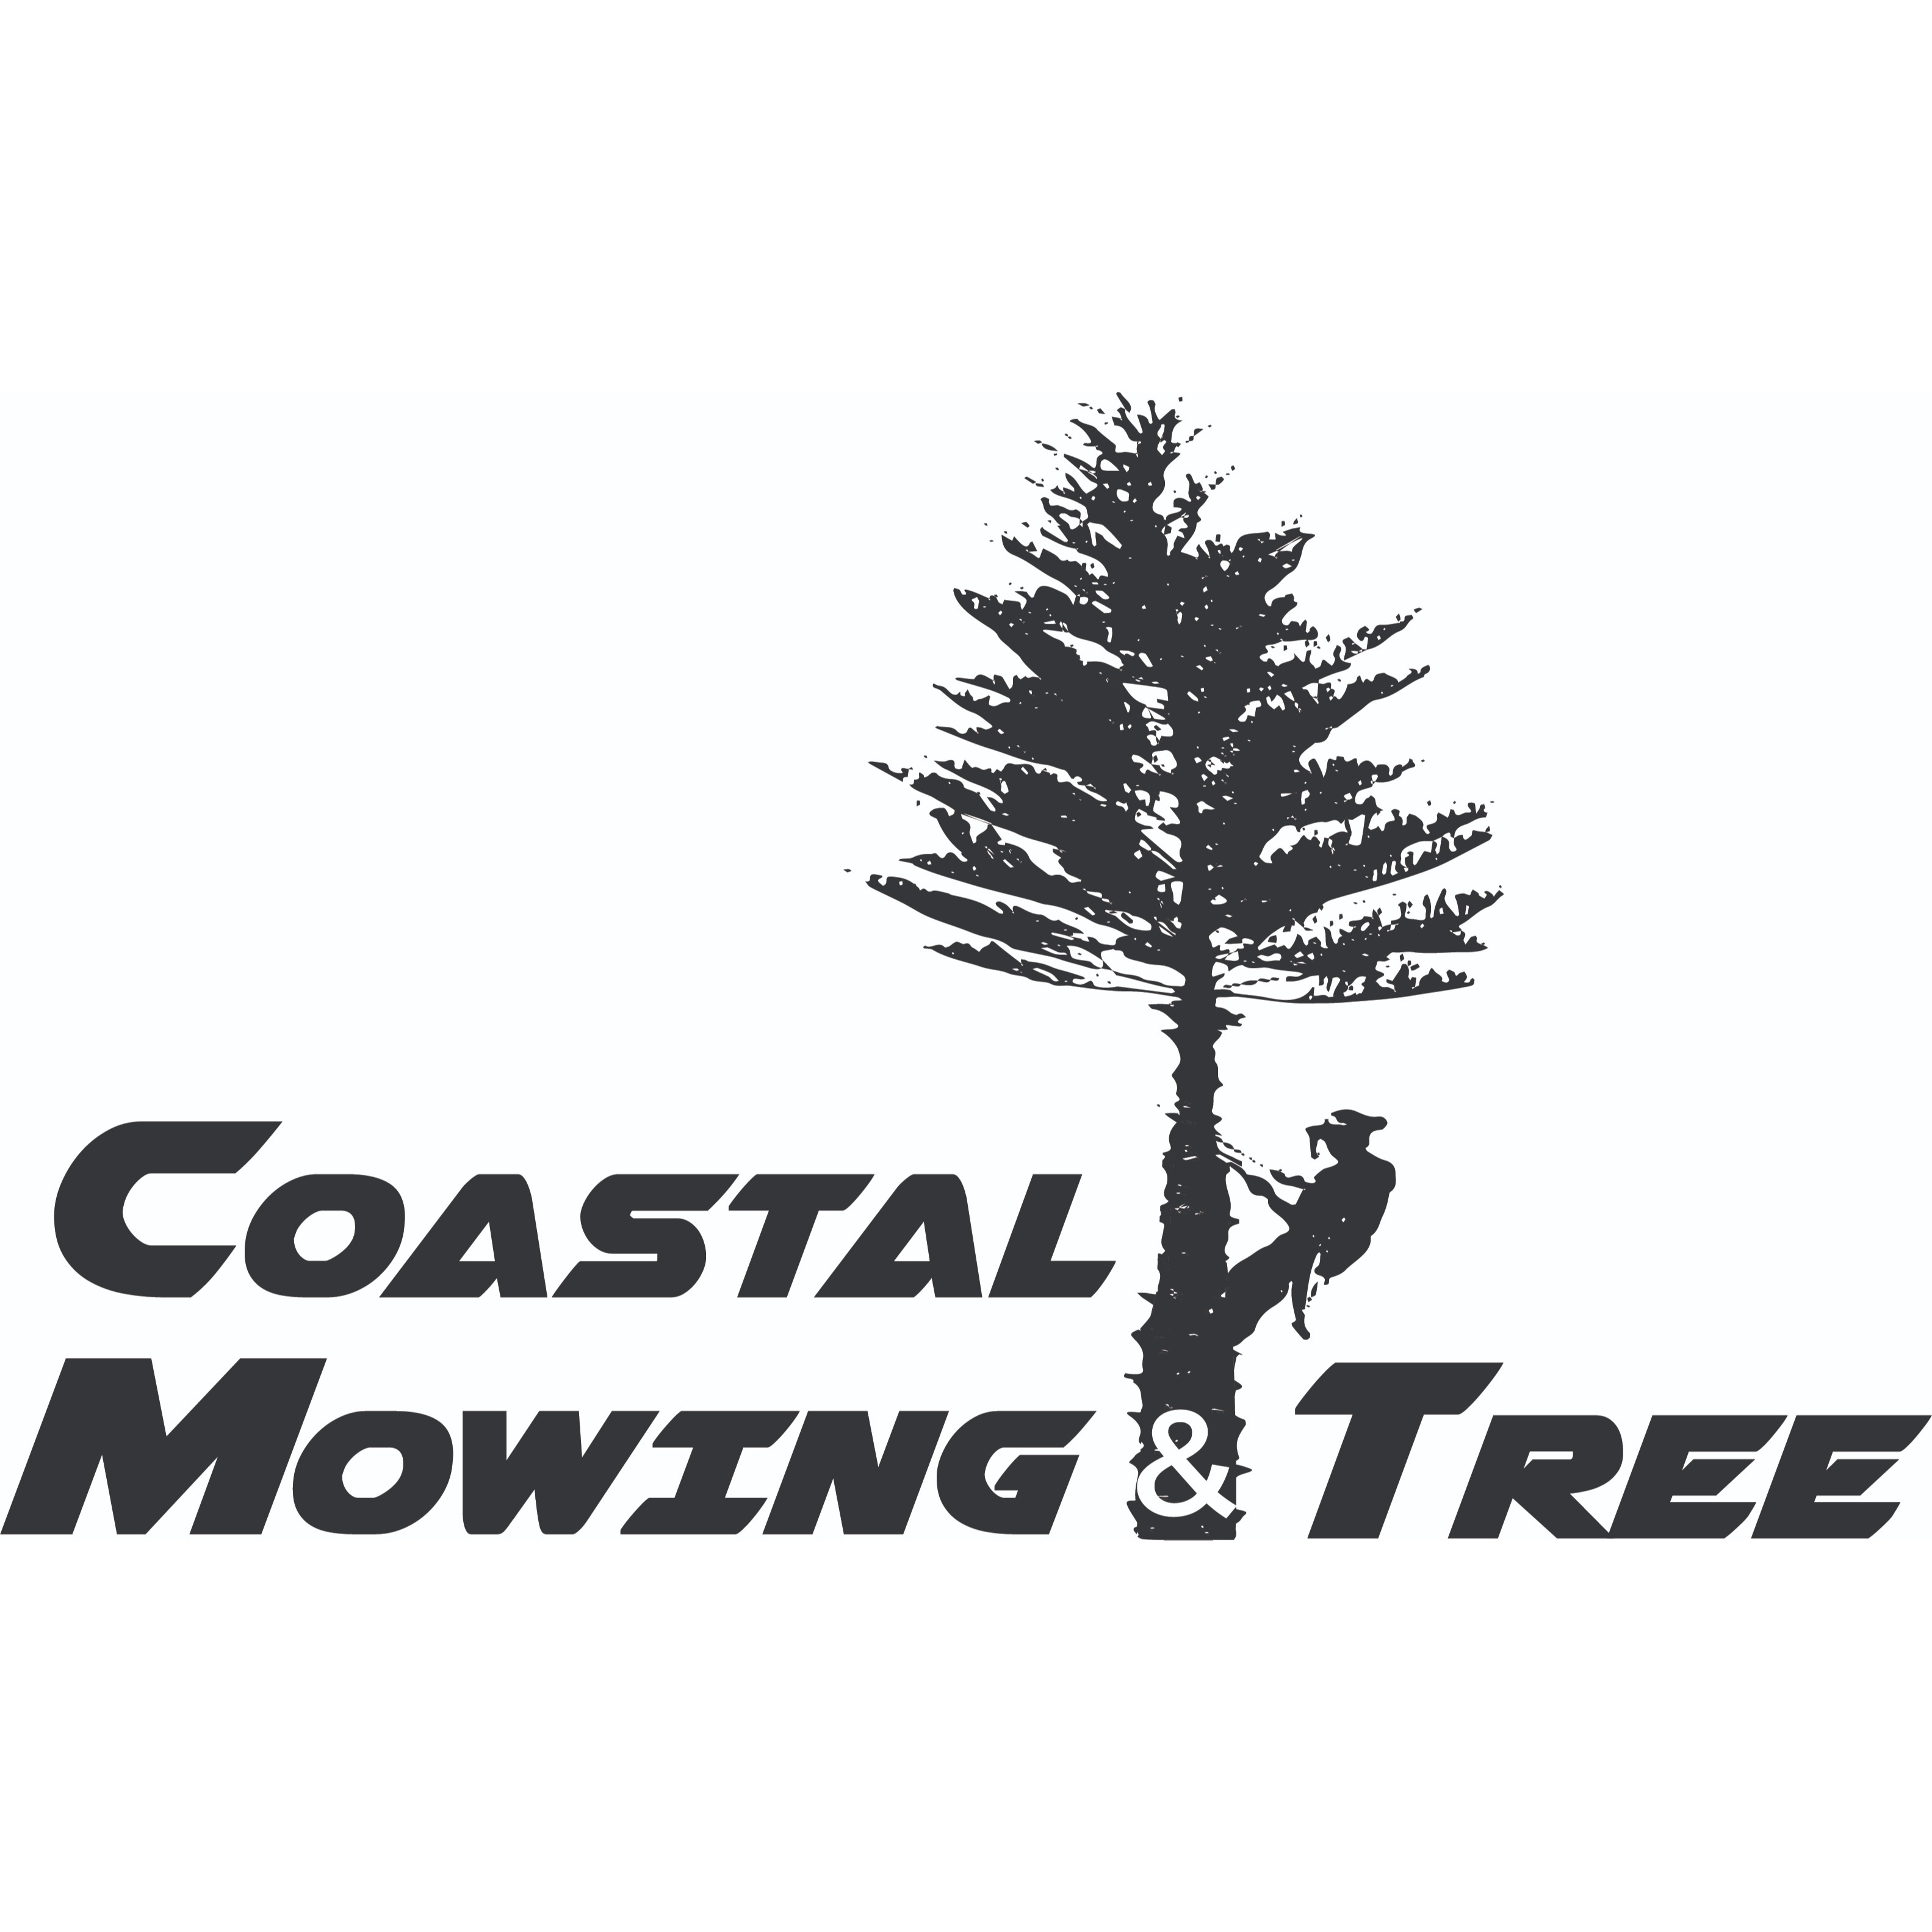 Coastal Mowing & Tree - Port Charlotte, FL - (941)391-5045 | ShowMeLocal.com